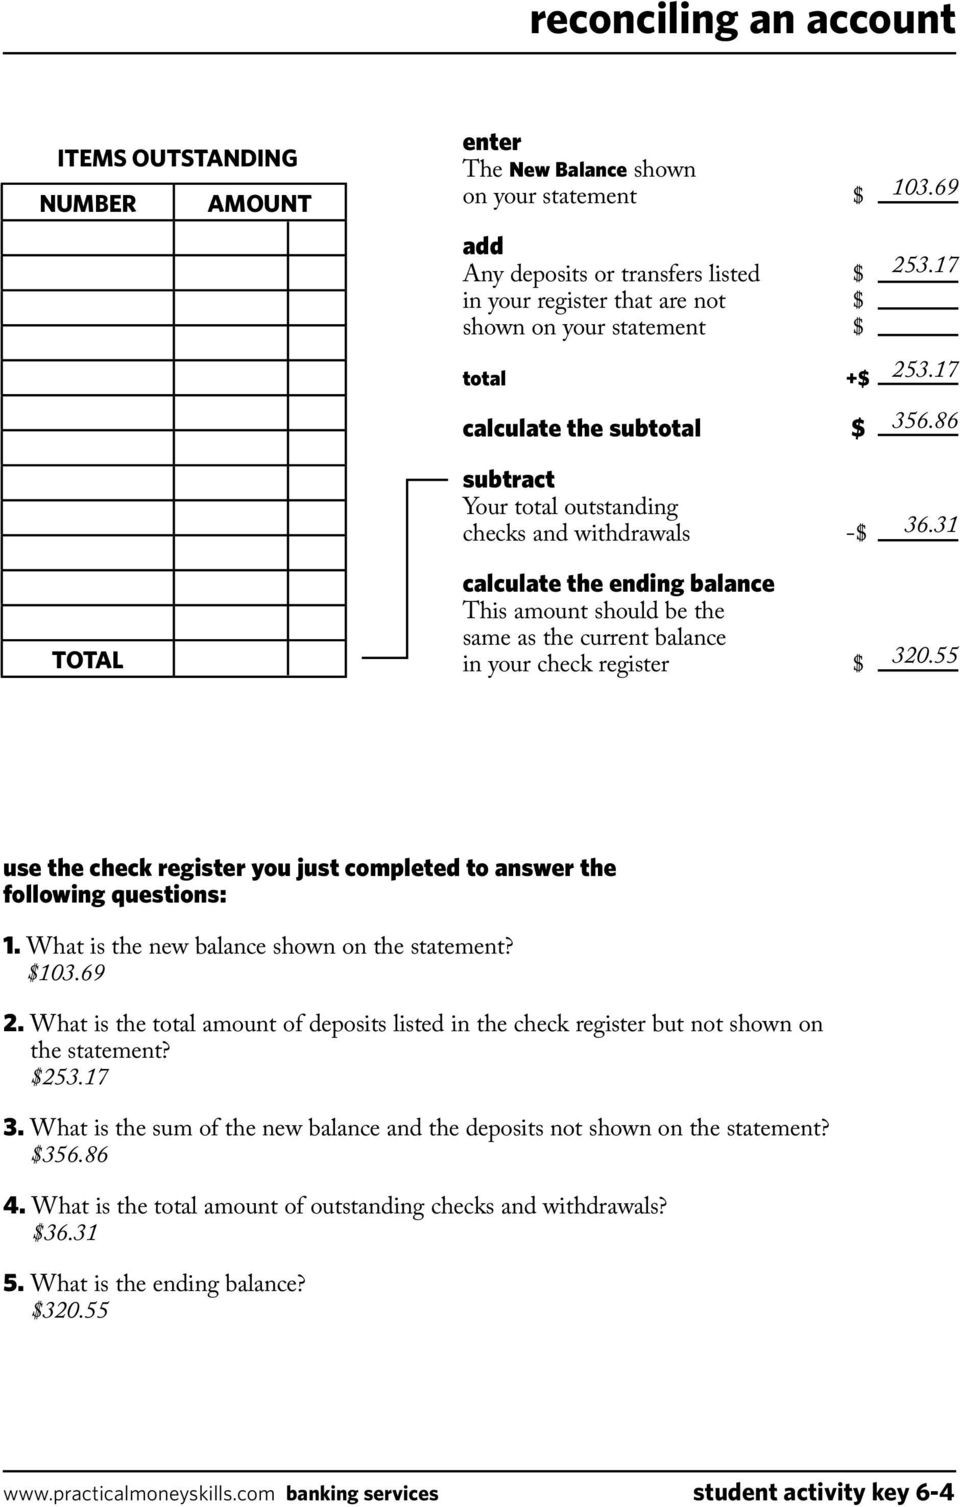 Reconciling A Bank Statement Worksheet Keeping A Running Balance Answer Key Pdf Free Download